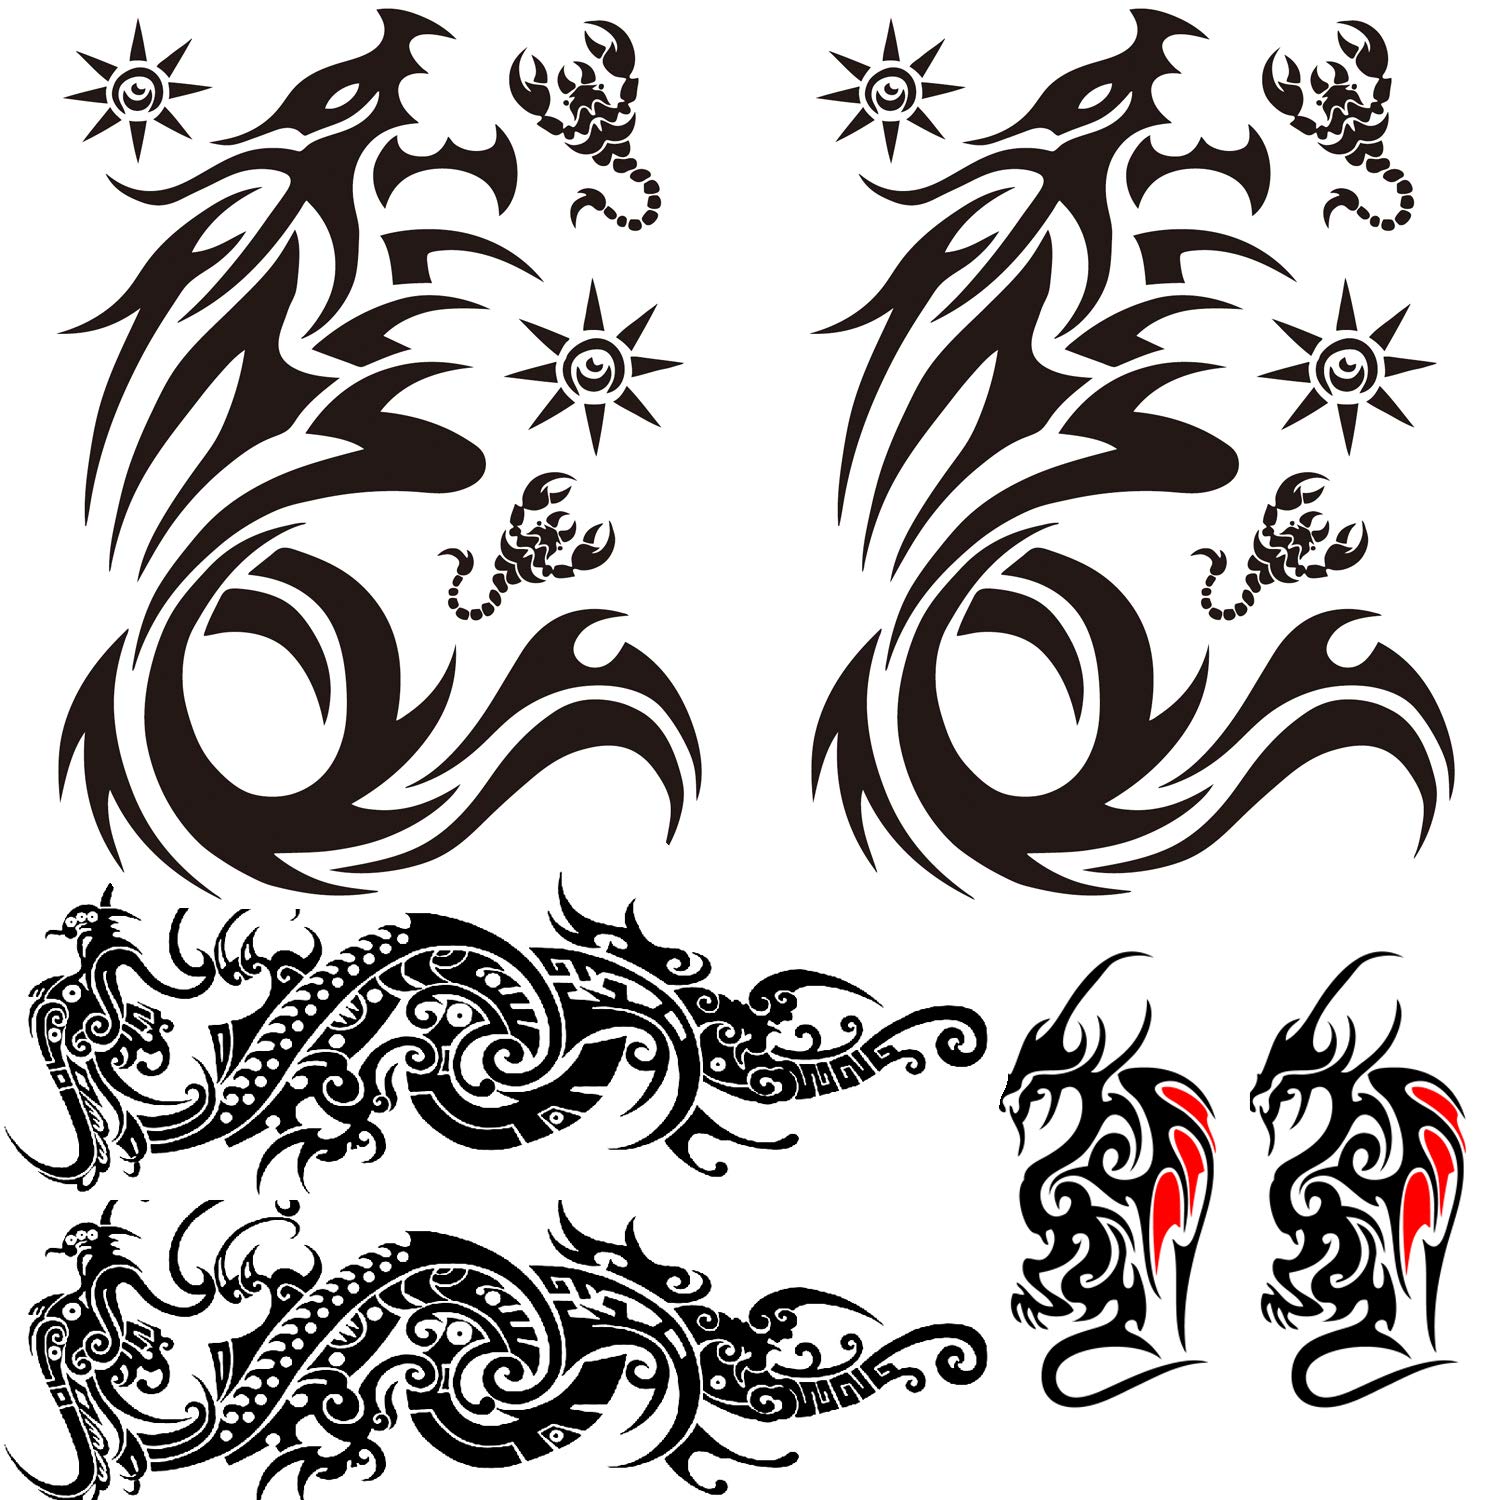 Tribal Dargon Totem Temporary Tattoos, Totem Full Sleeve Tattoo Sticker,  Big Fake Dragon Tattoo, Small Animal Totem Tattoos for Men Women Body Art  Makeup, 6-Sheet DragonTotem Tattoos